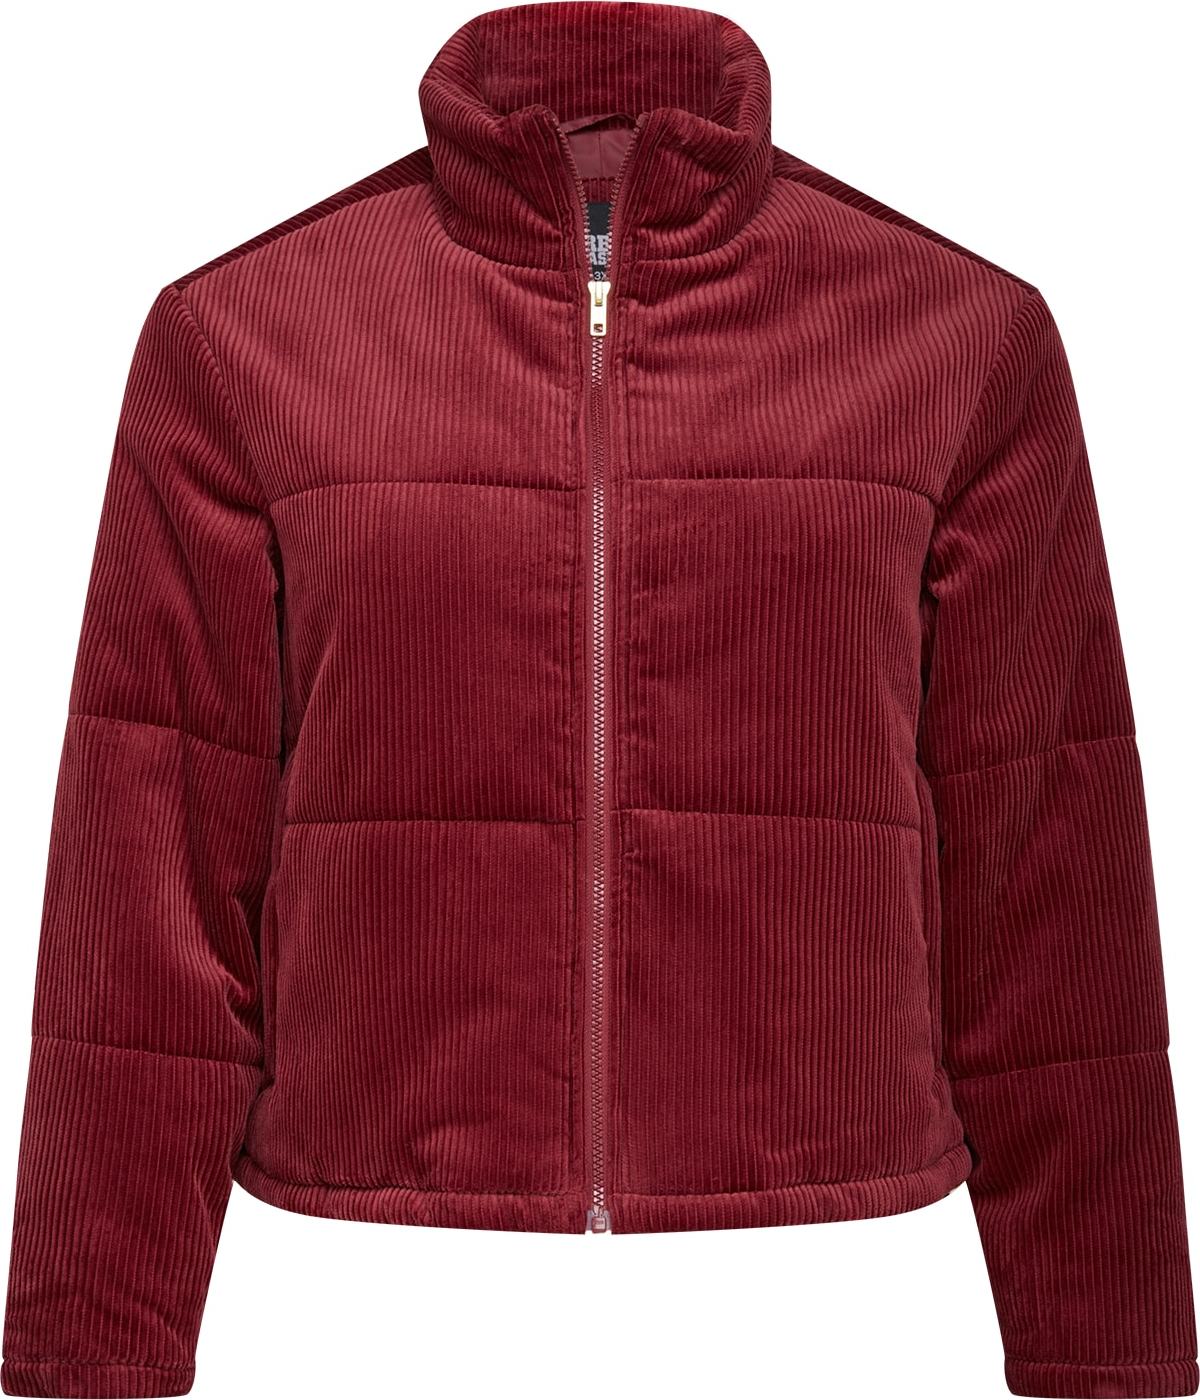 Přechodná bunda 'Corduroy Puffer Jacket' Urban Classics burgundská červeň